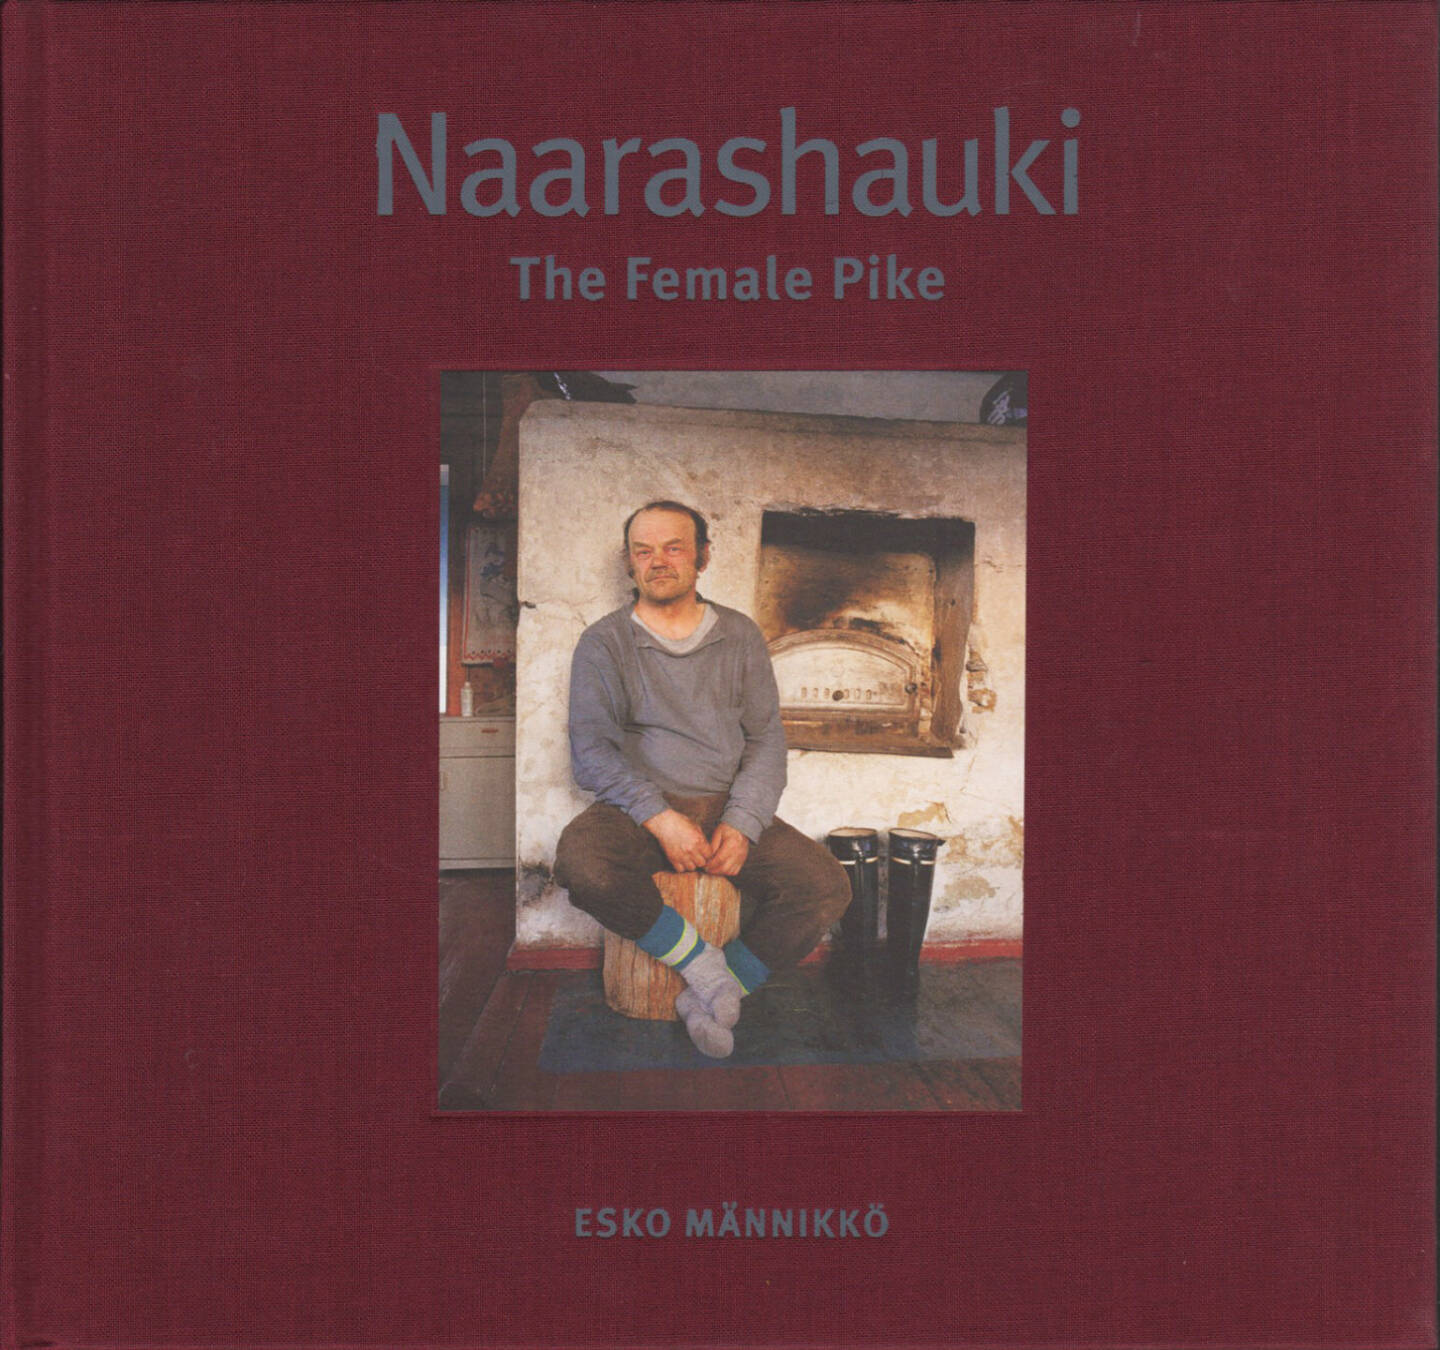 Esko Männikkö - Naarashauki: the Female Pike, Self published 2008, Cover - http://josefchladek.com/book/esko_mannikko_-_naarashauki_the_female_pike